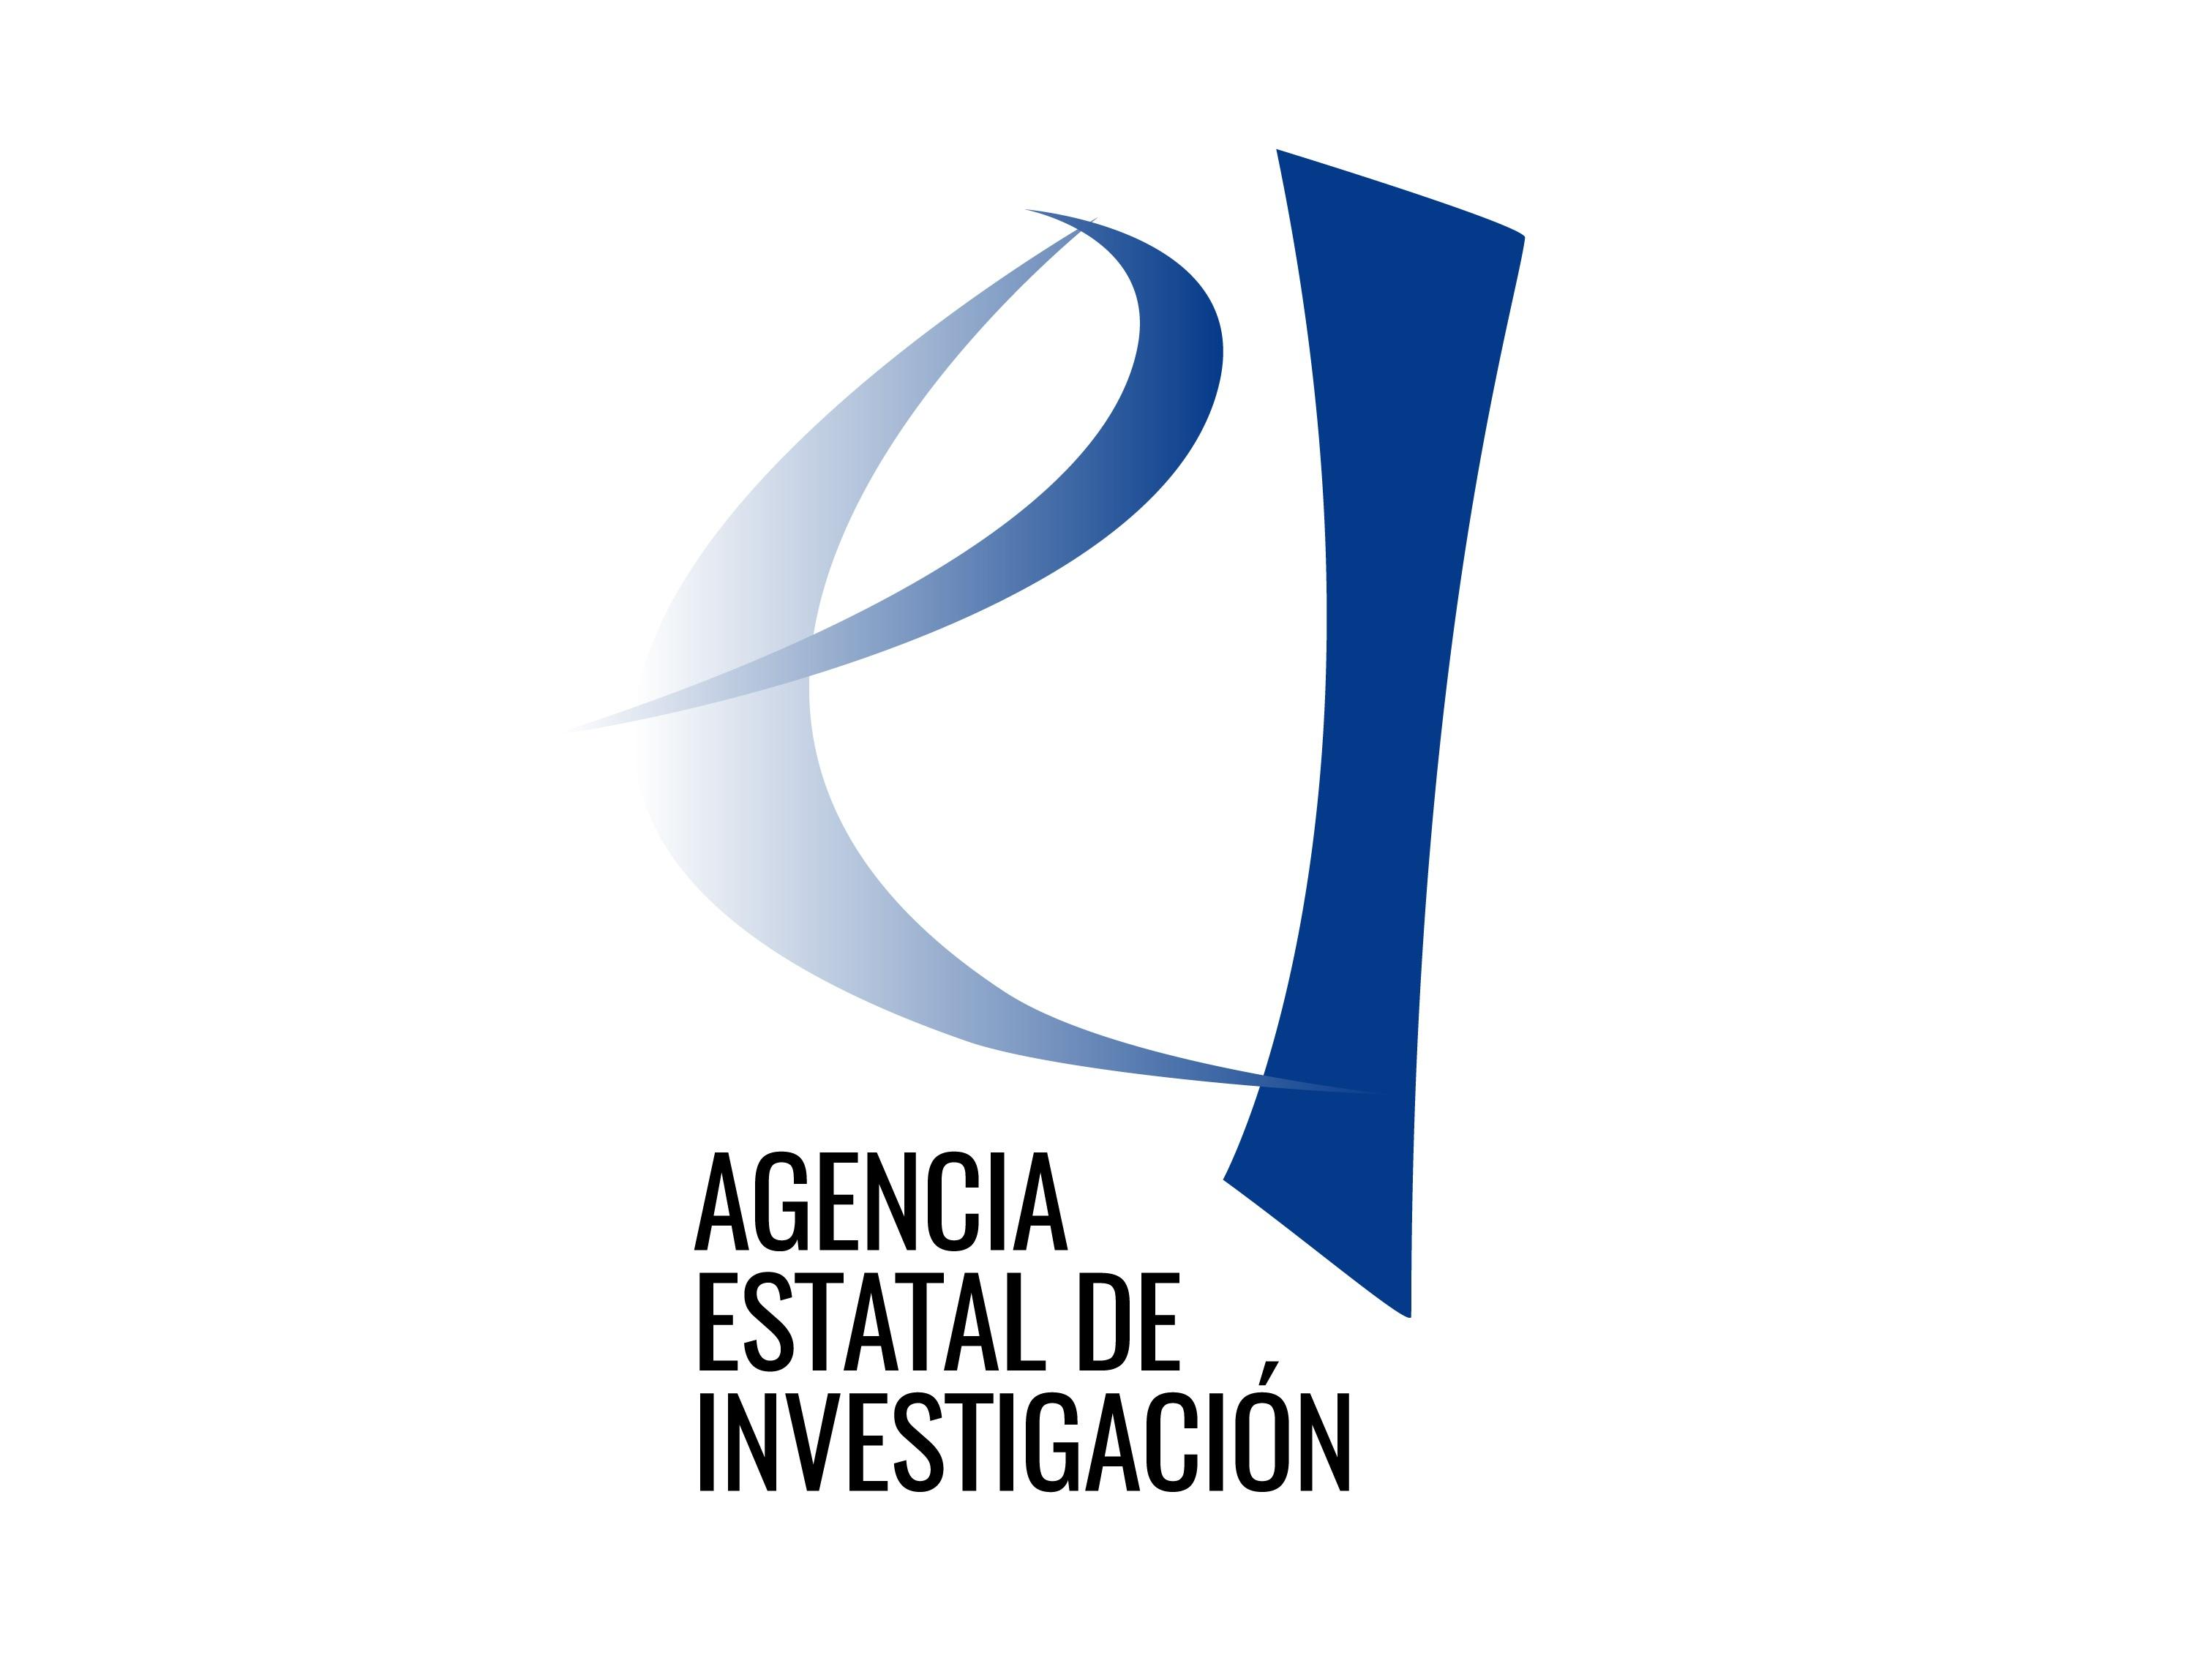 AEI logo